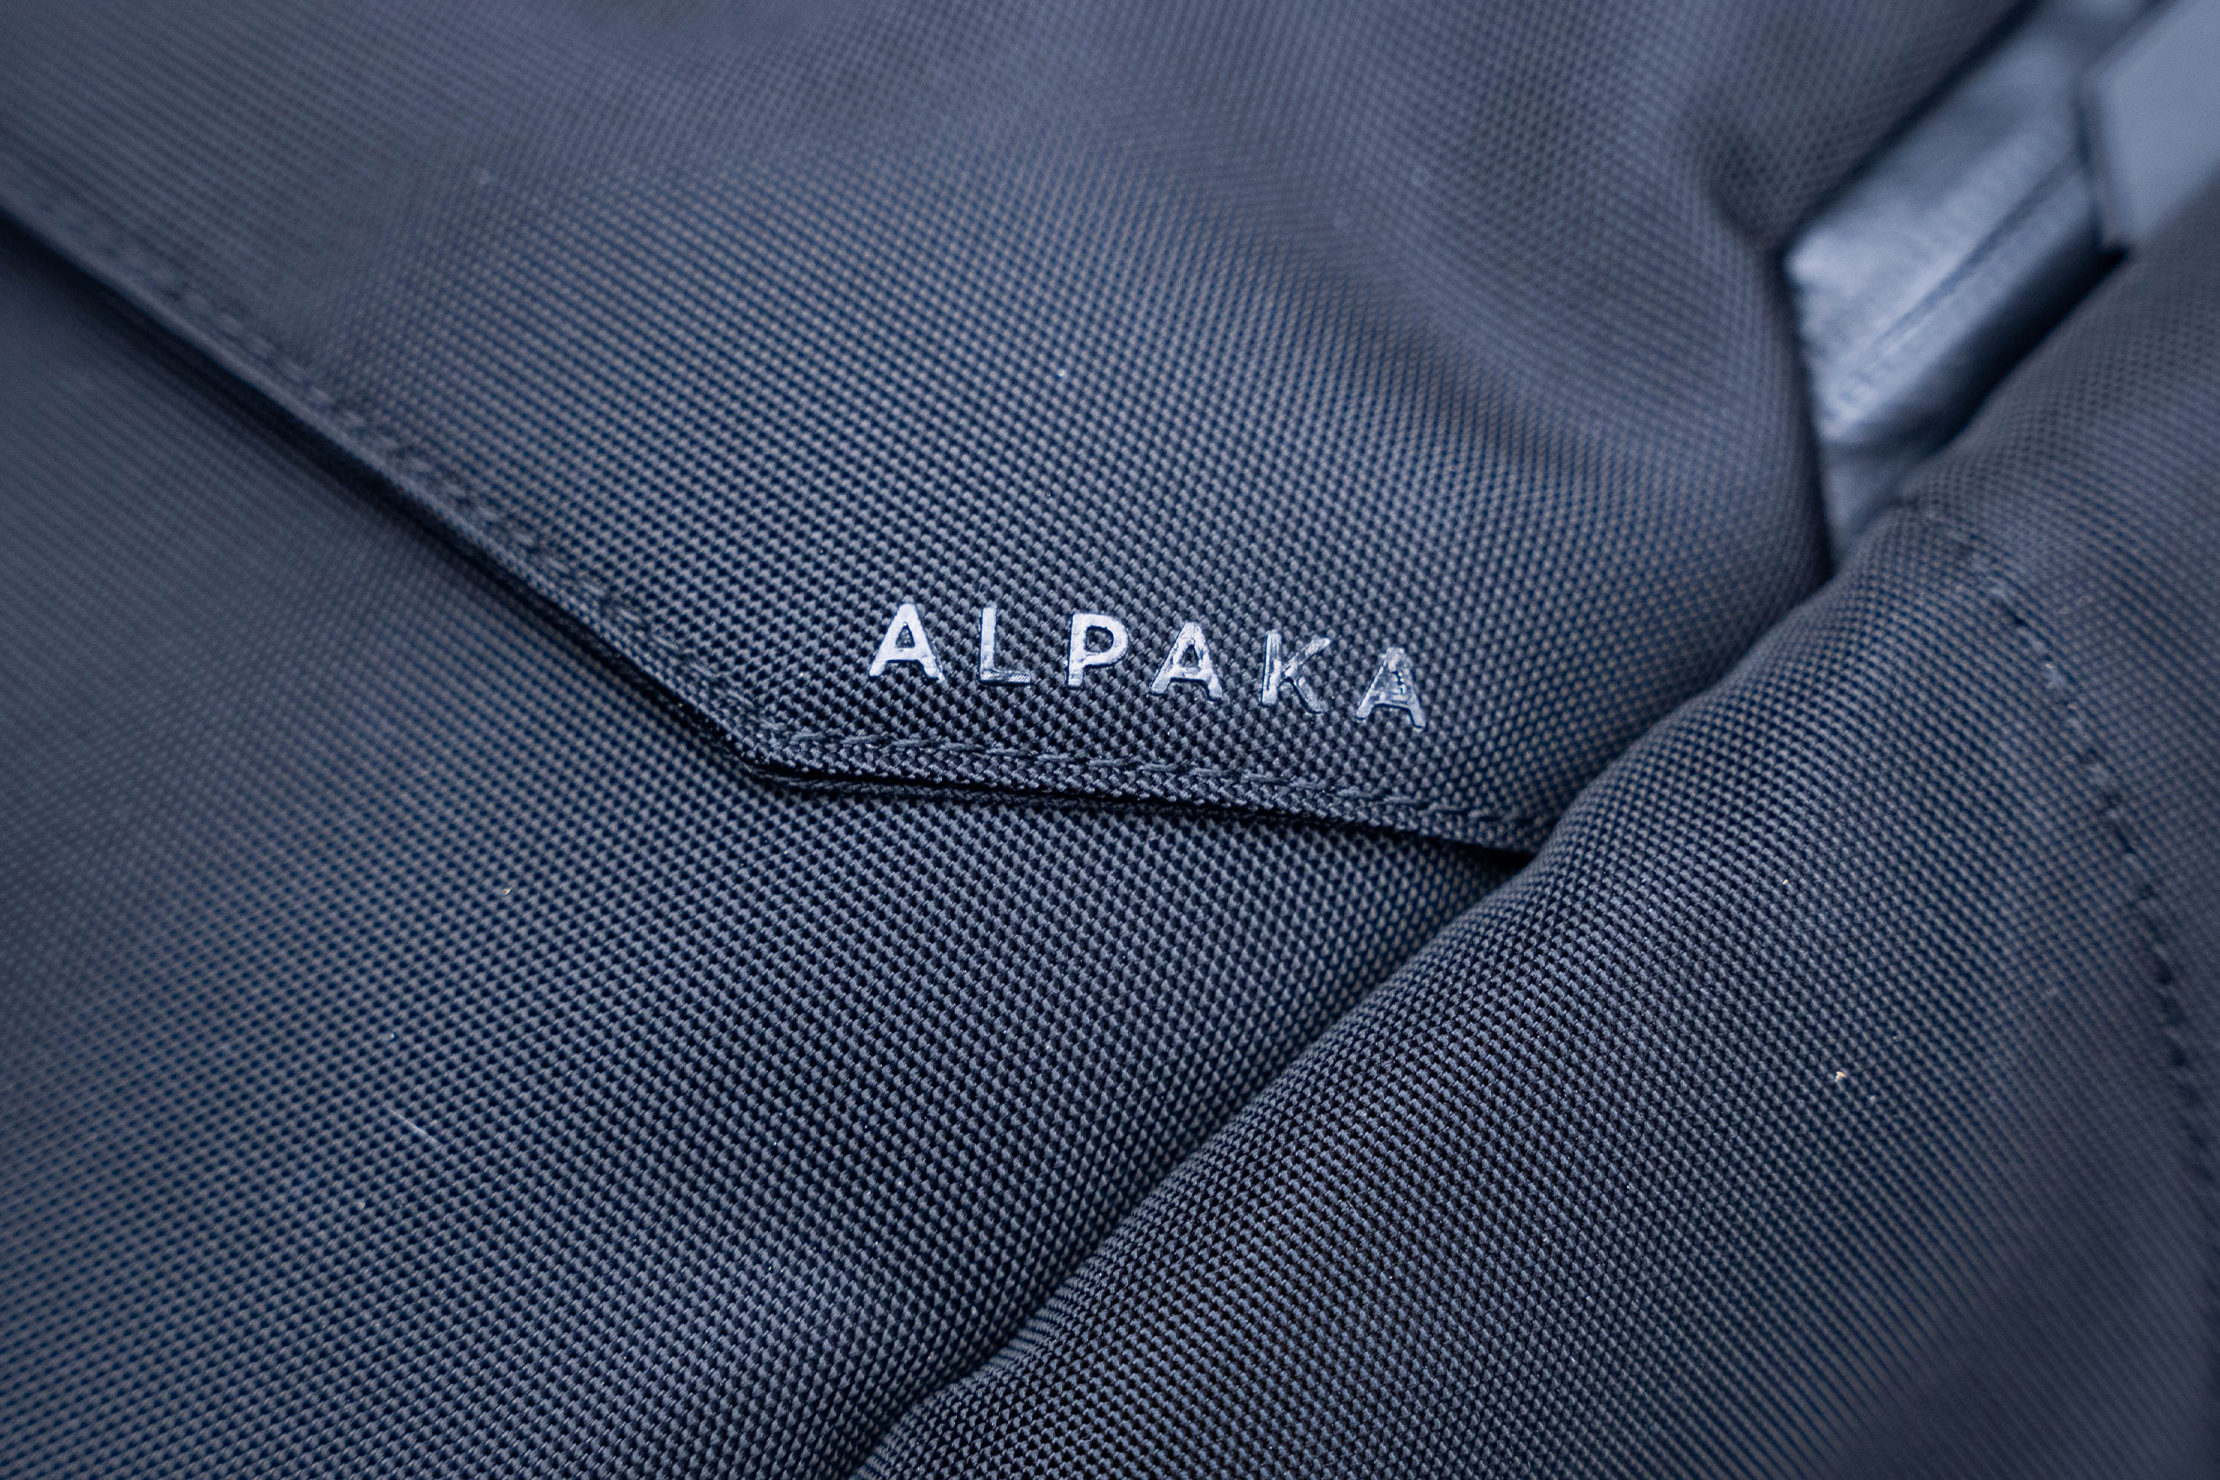 ALPAKA Elements Backpack Pro Brand